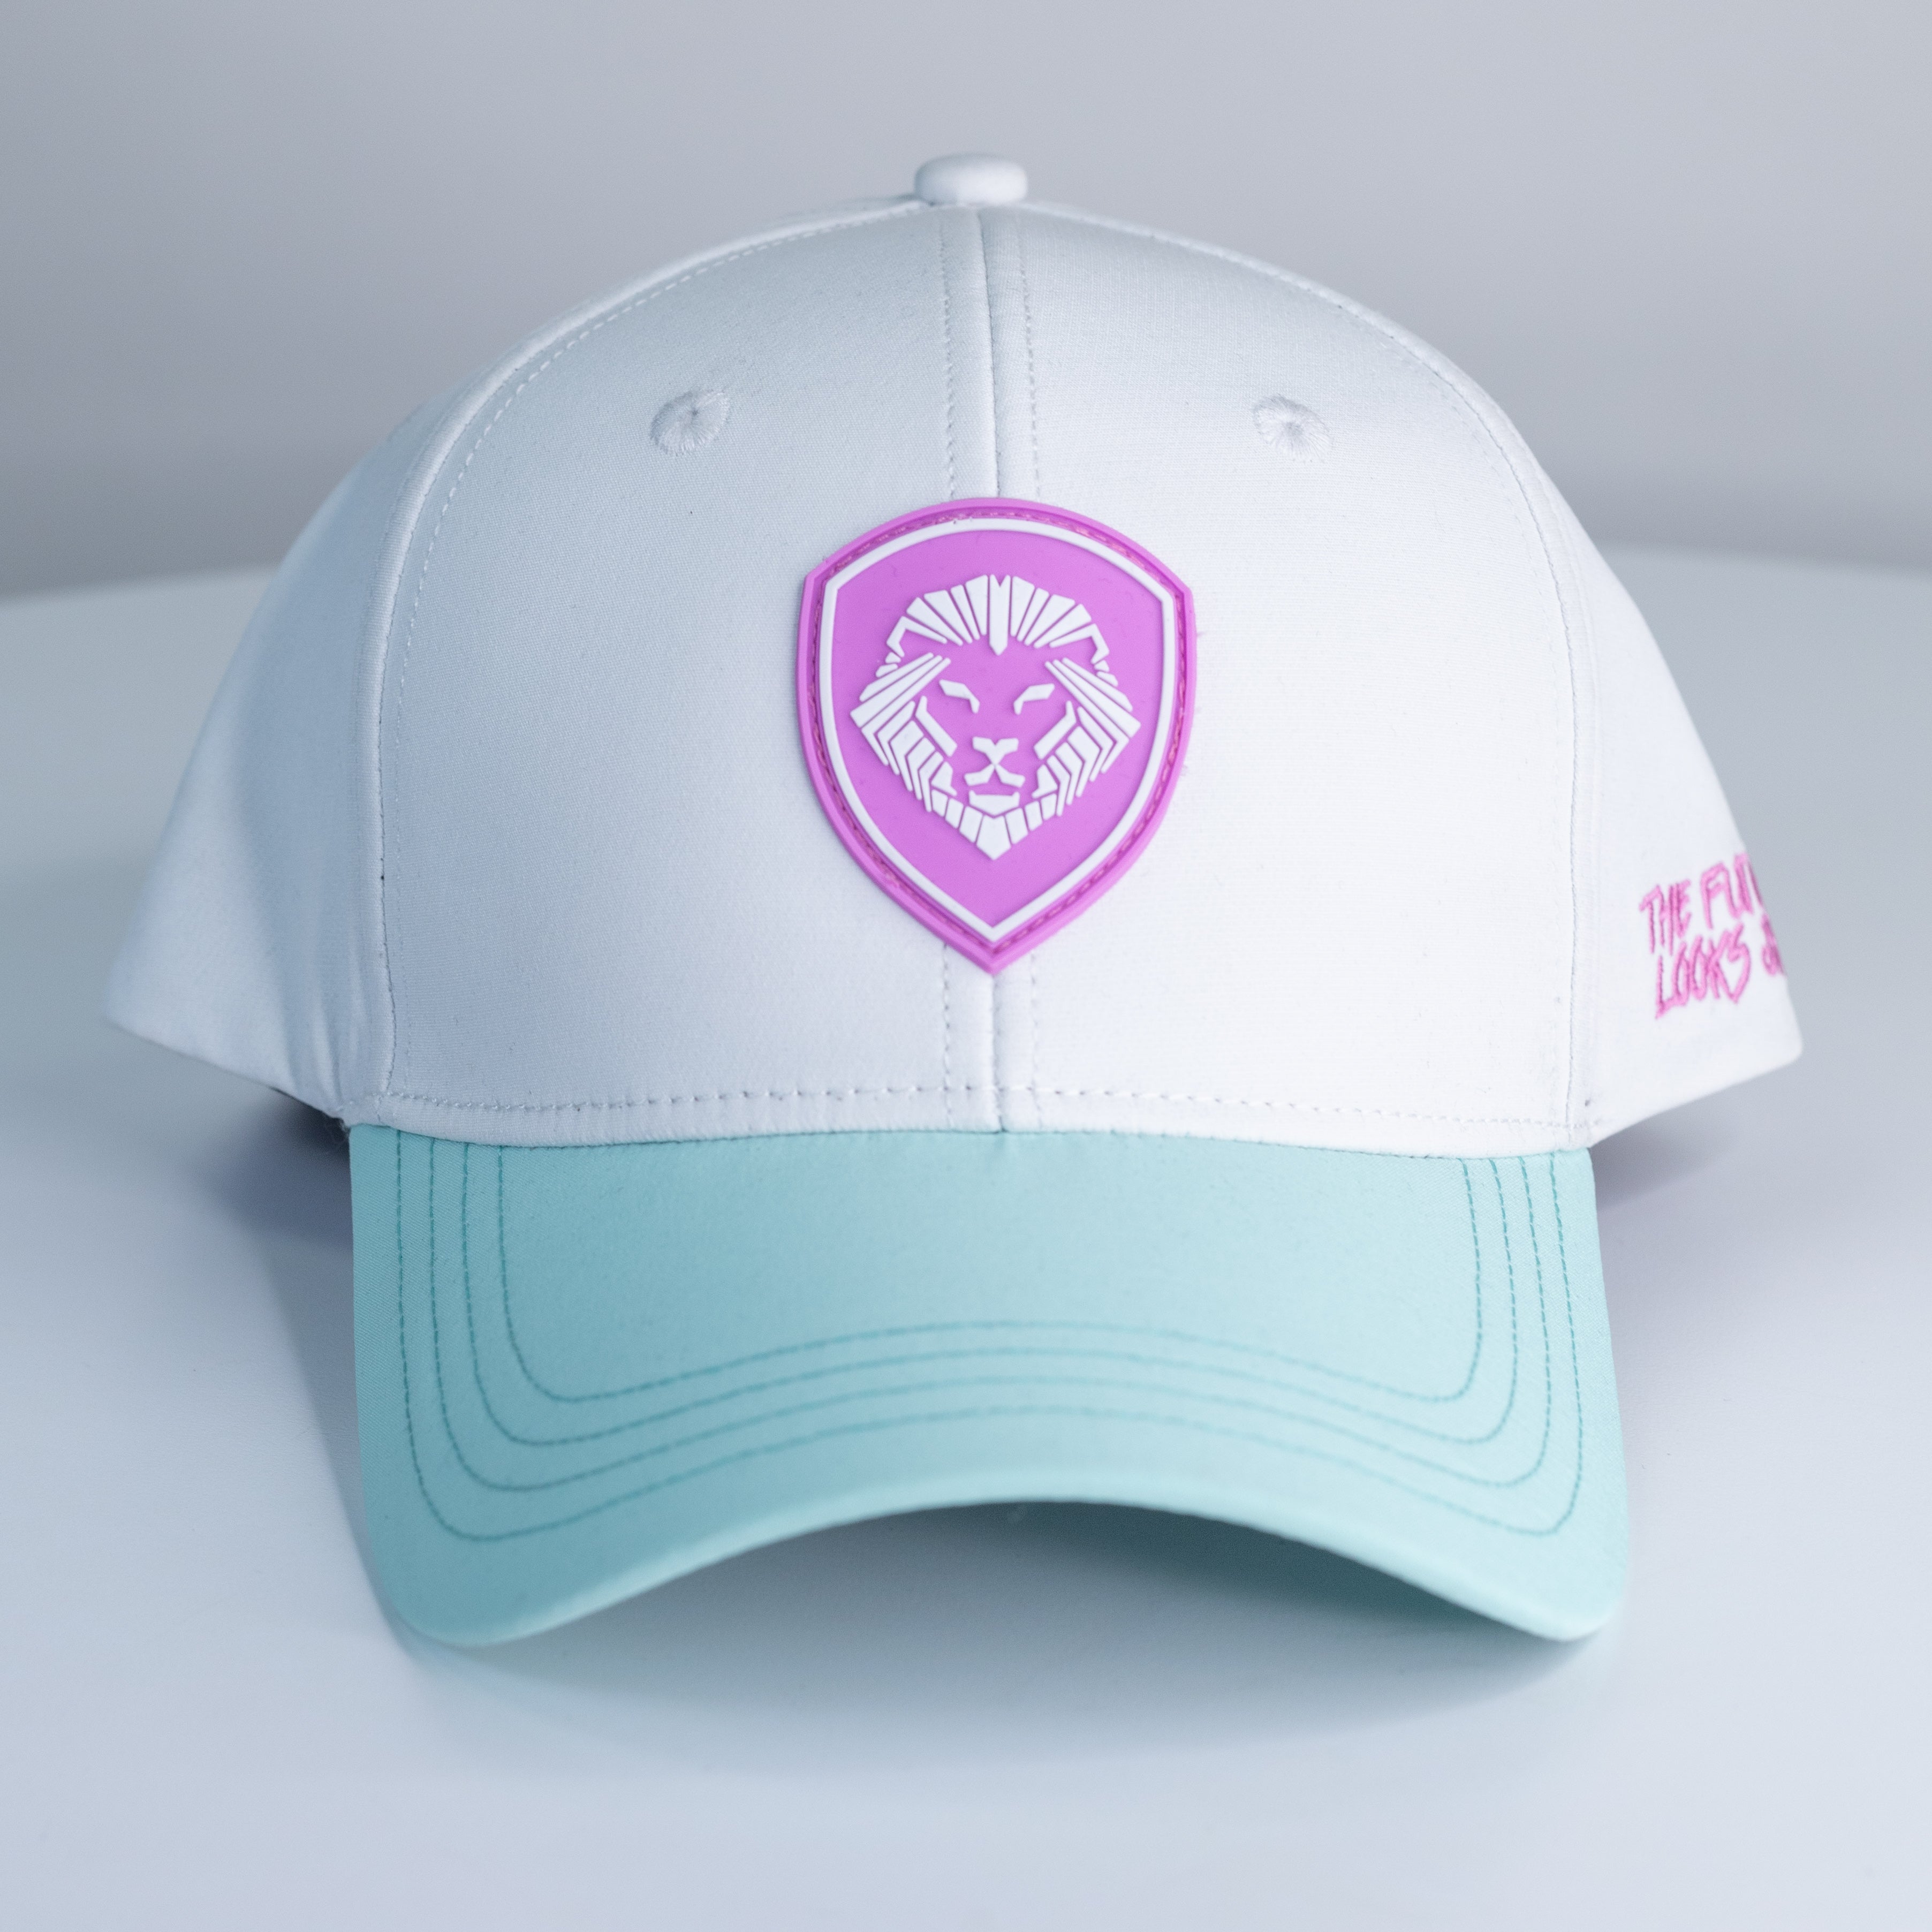 Miami Store – FLB Valuetainment Vice Hat